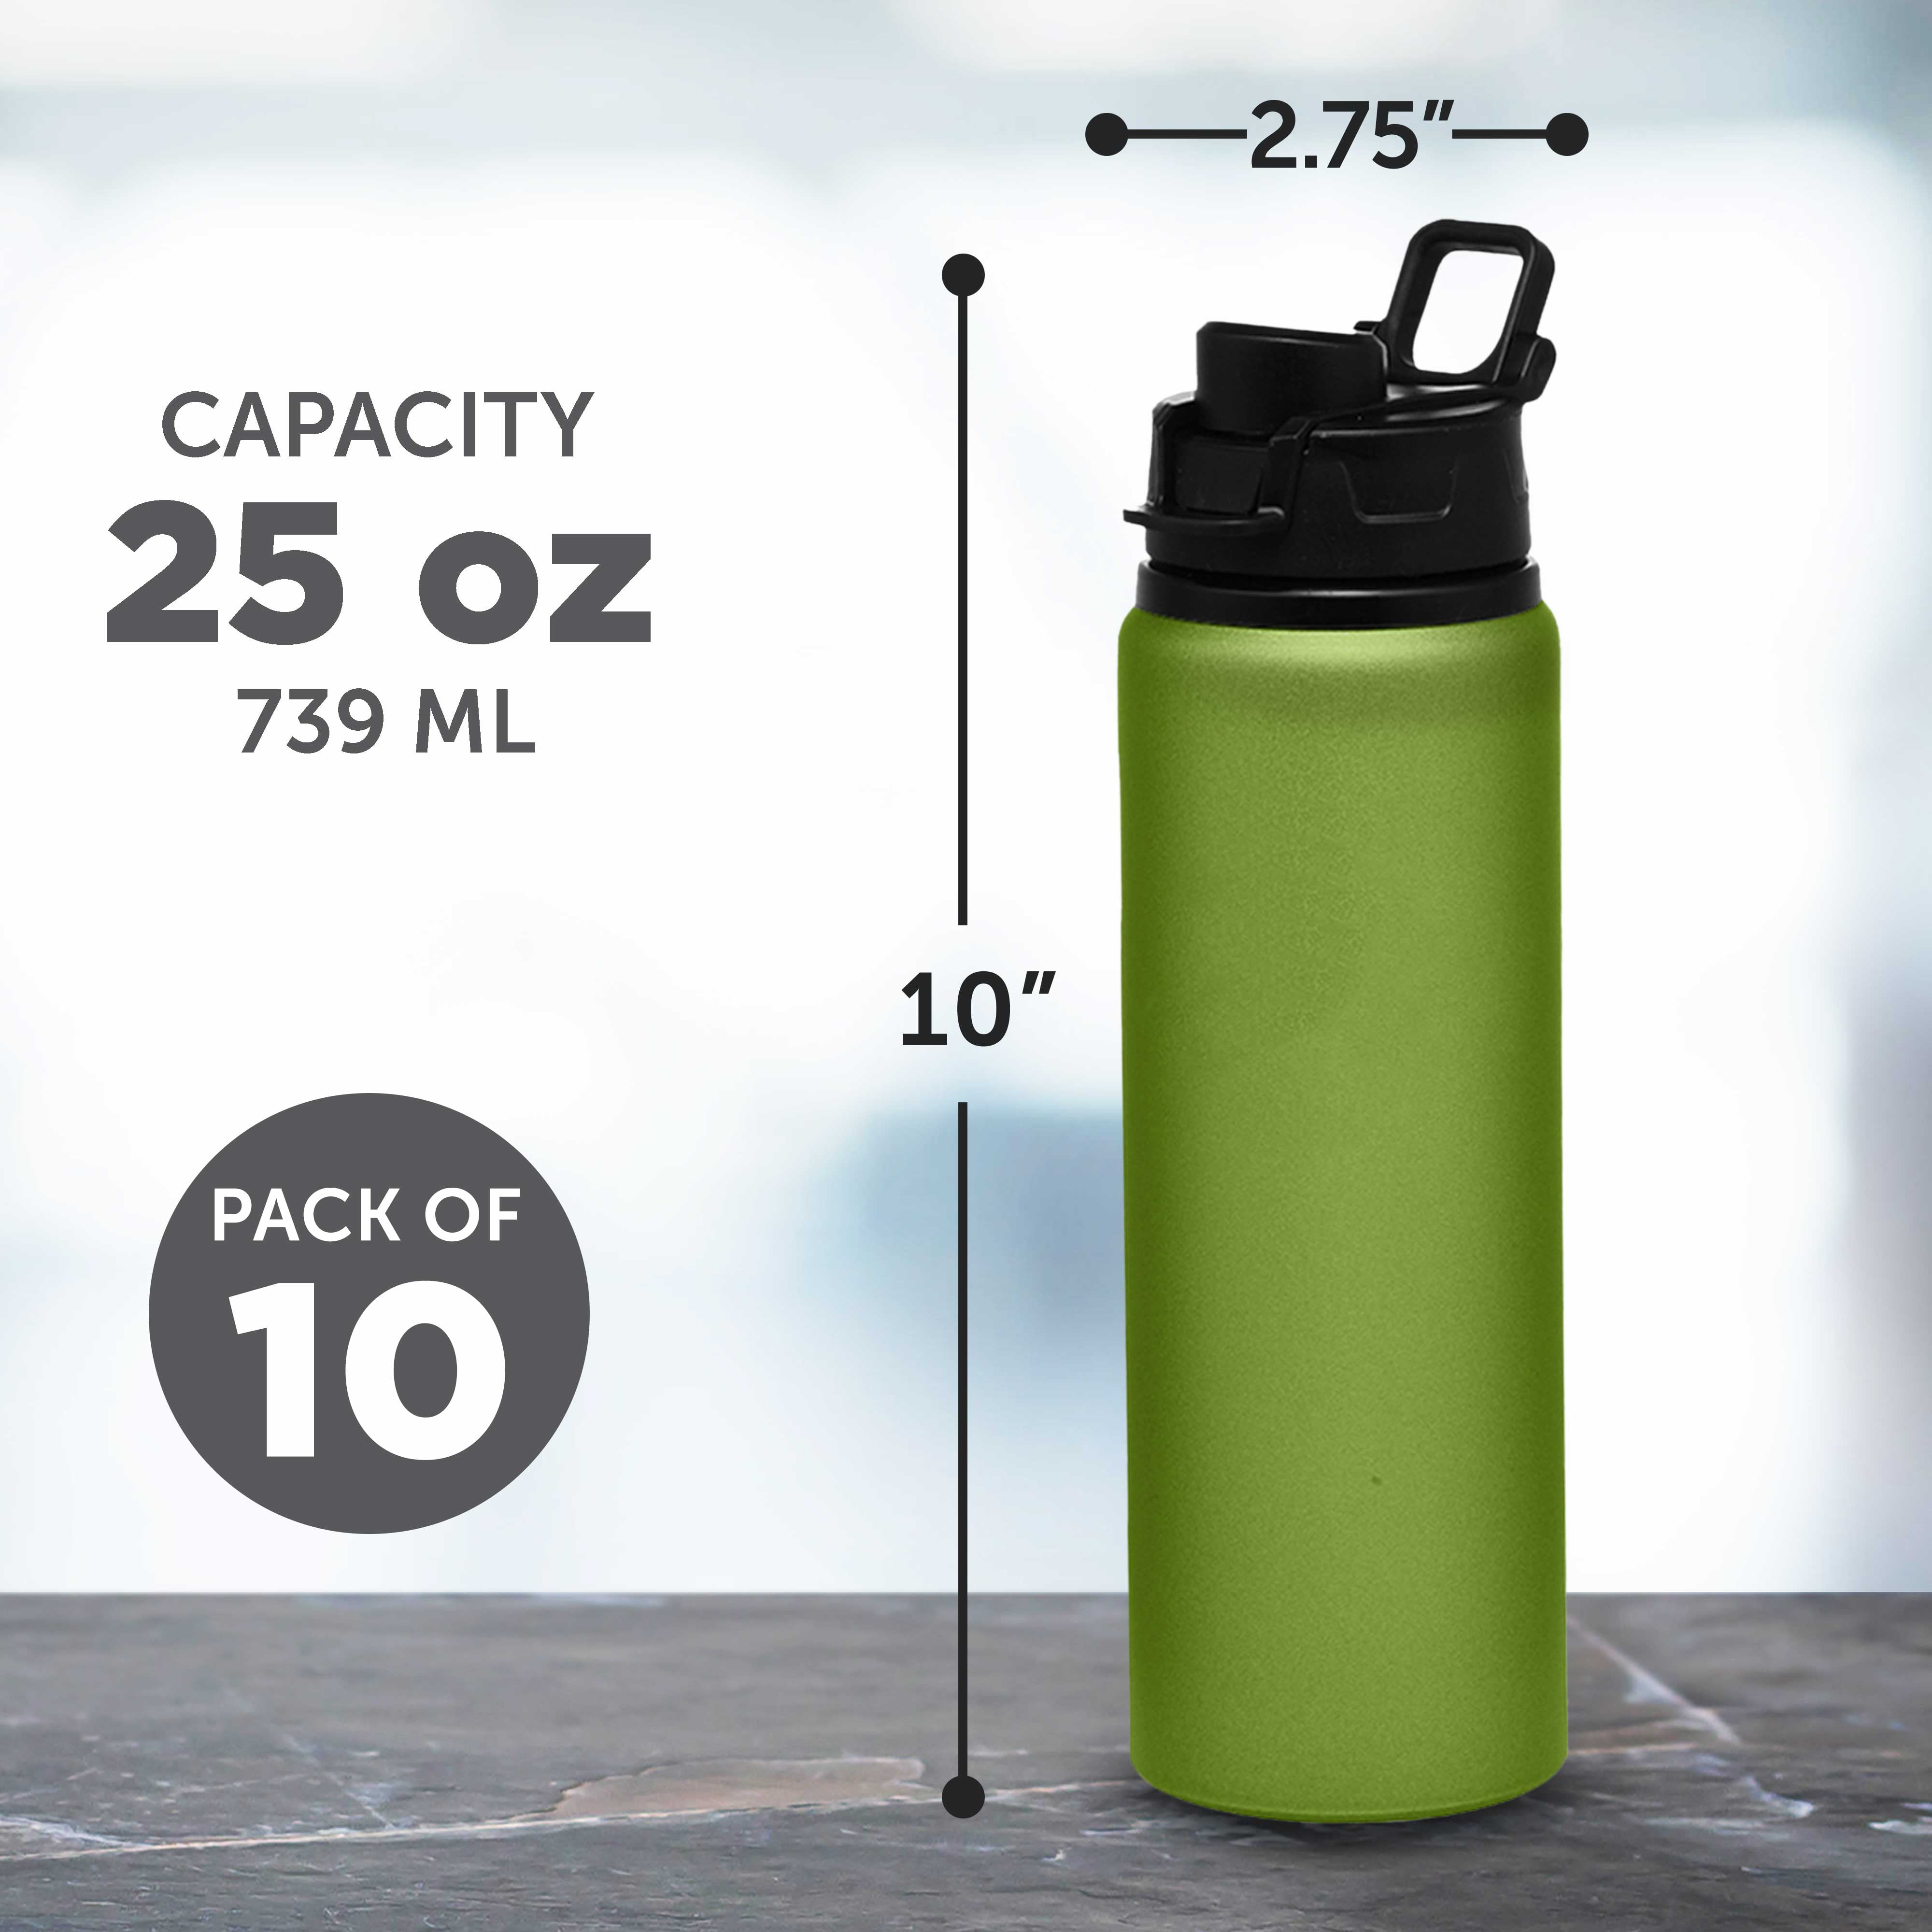 LYDTICK 10 Pack Water Bottles Bulk, 20oz Sports Aluminum Water Bottle with  Snap Lids Metal Reusable …See more LYDTICK 10 Pack Water Bottles Bulk, 20oz